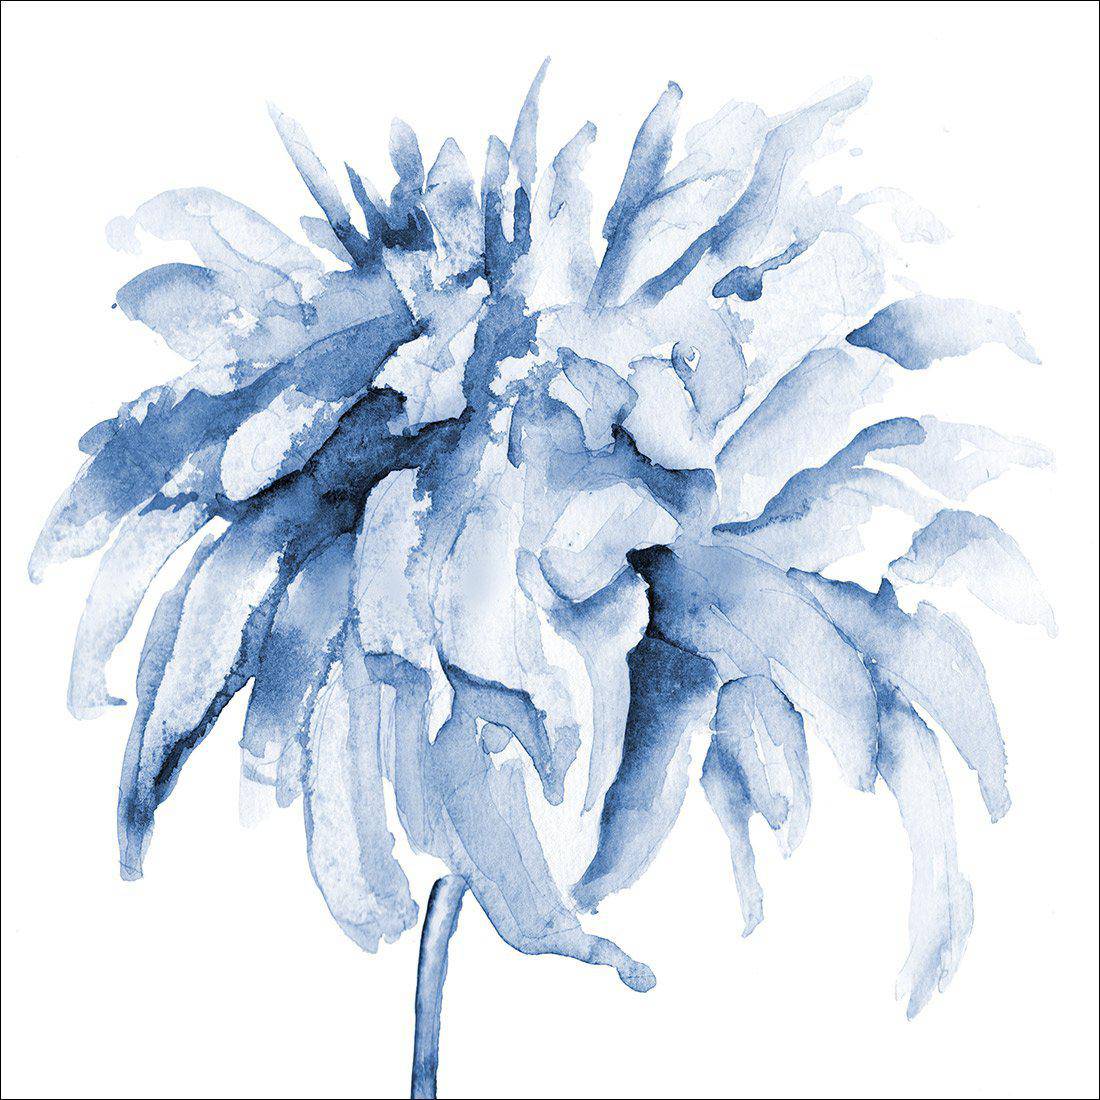 Fairy Floss, Blue Canvas Art-Canvas-Wall Art Designs-30x30cm-Canvas - No Frame-Wall Art Designs